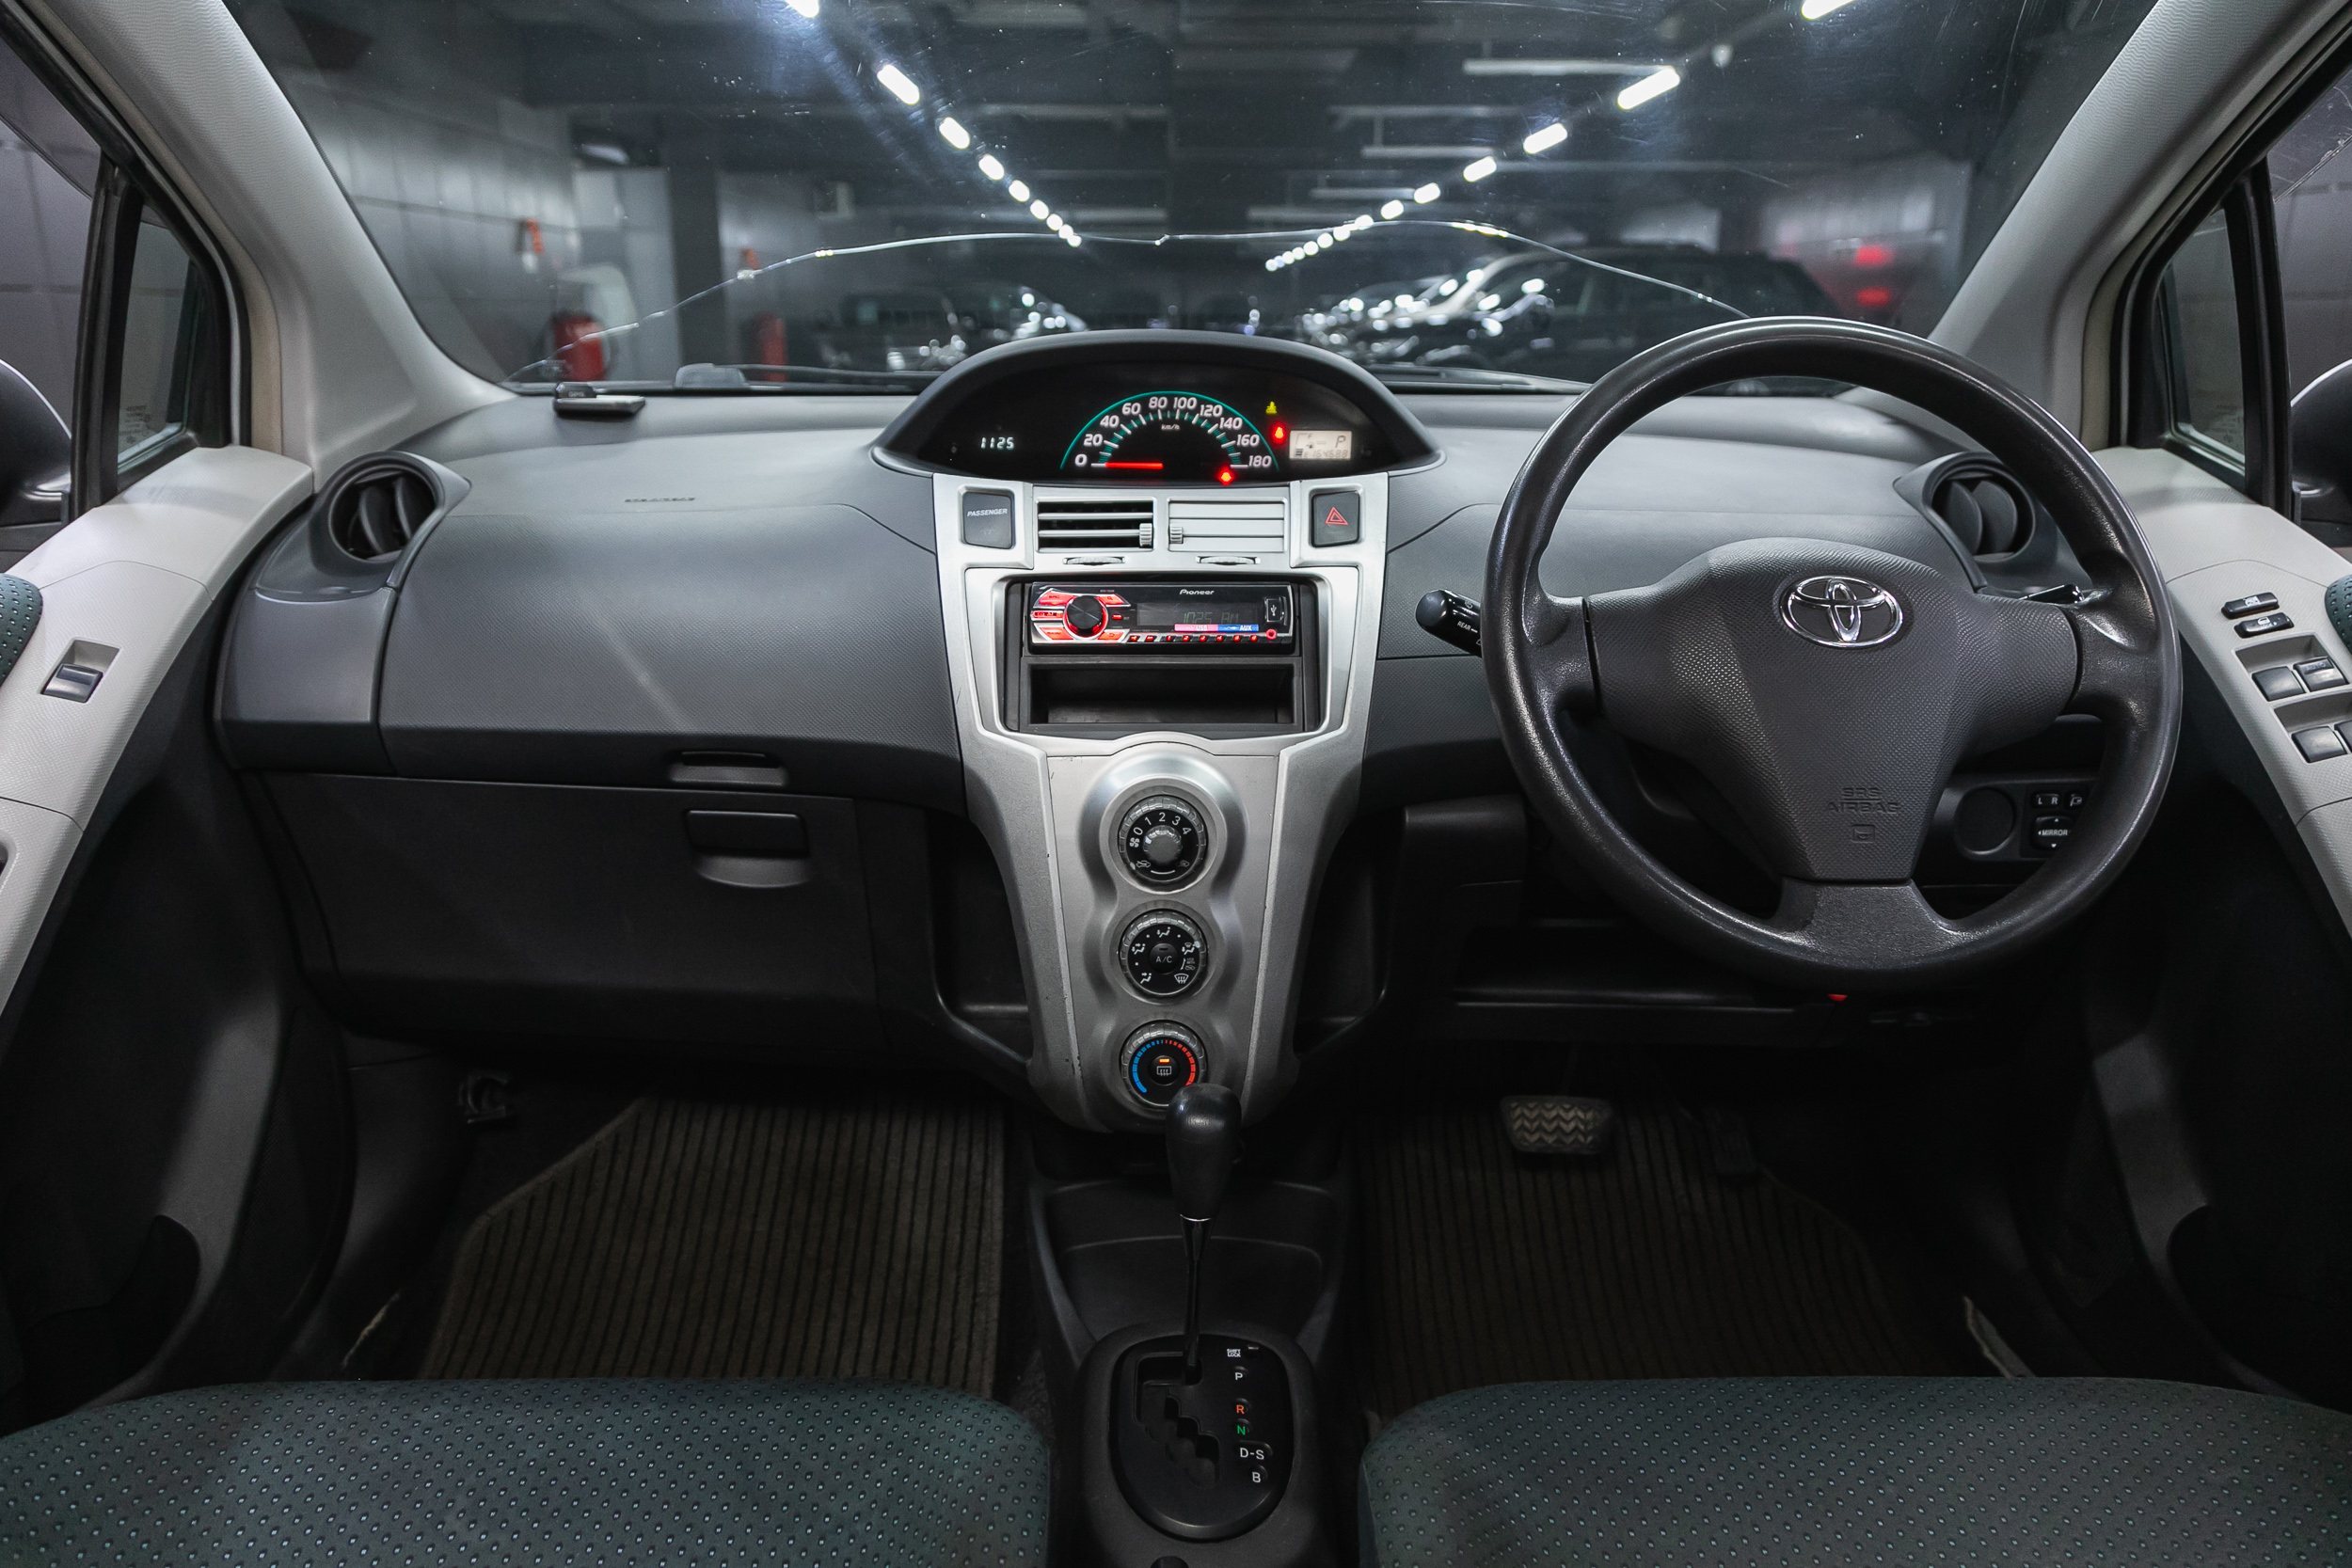 Toyota Vitz interior + dashboard